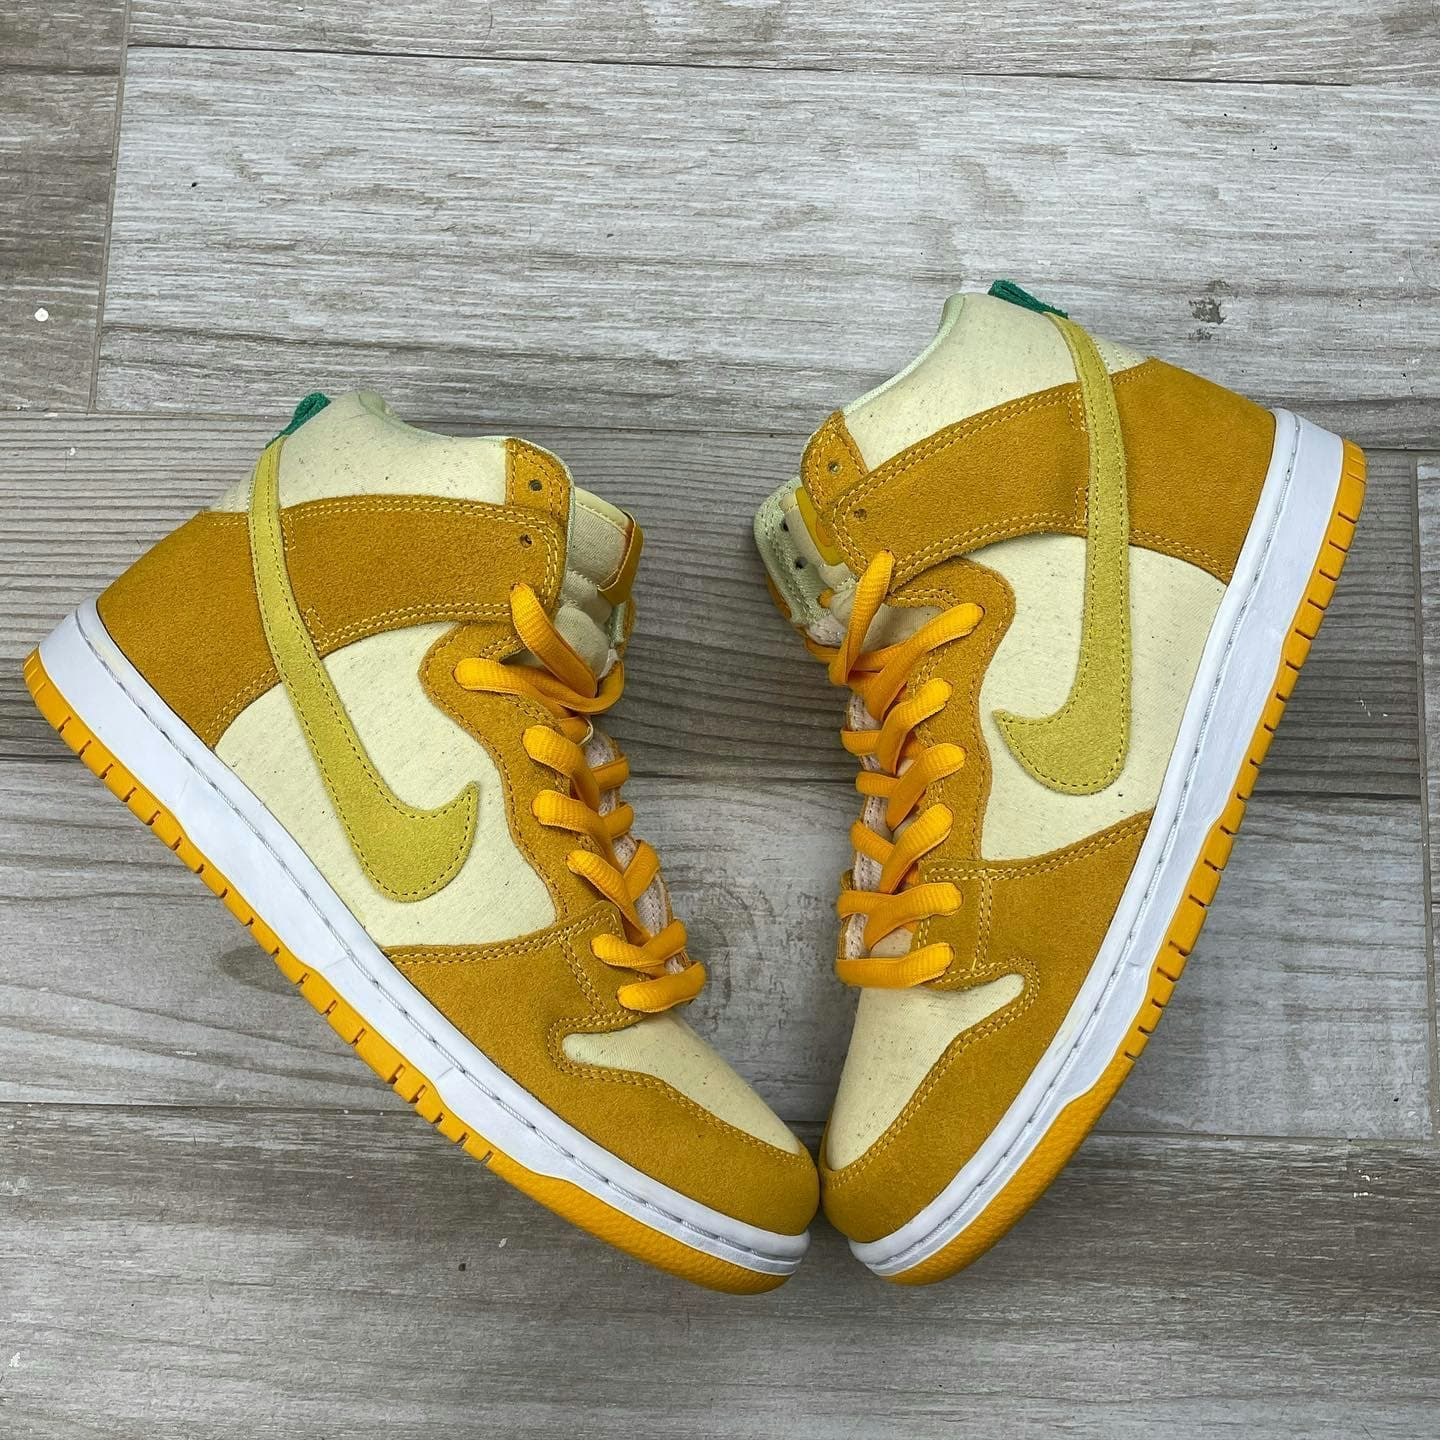 Nike SB Dunk High "Pineapple"